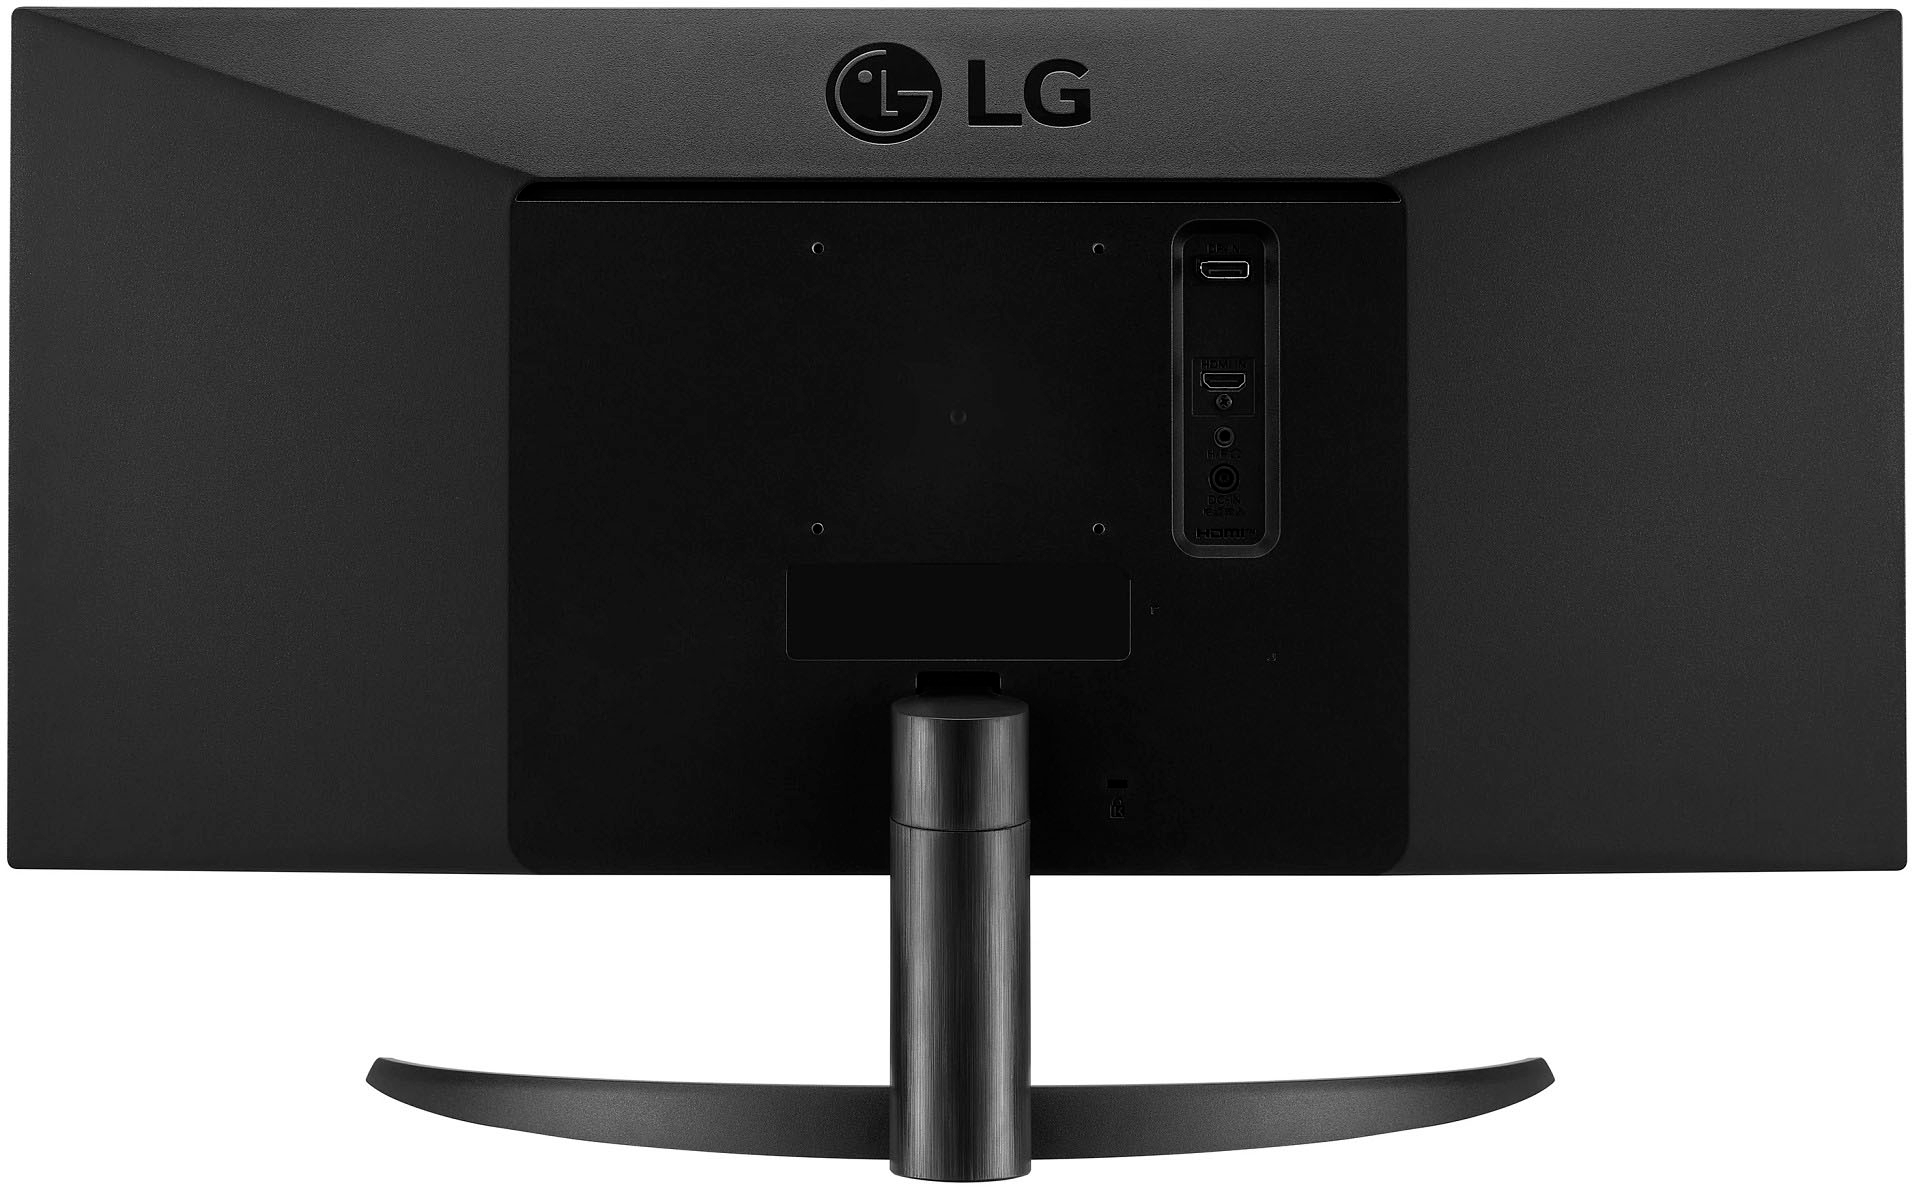 LG 29” IPS LED UltraWide FHD AMD FreeSync Monitor with HDR (HDMI 